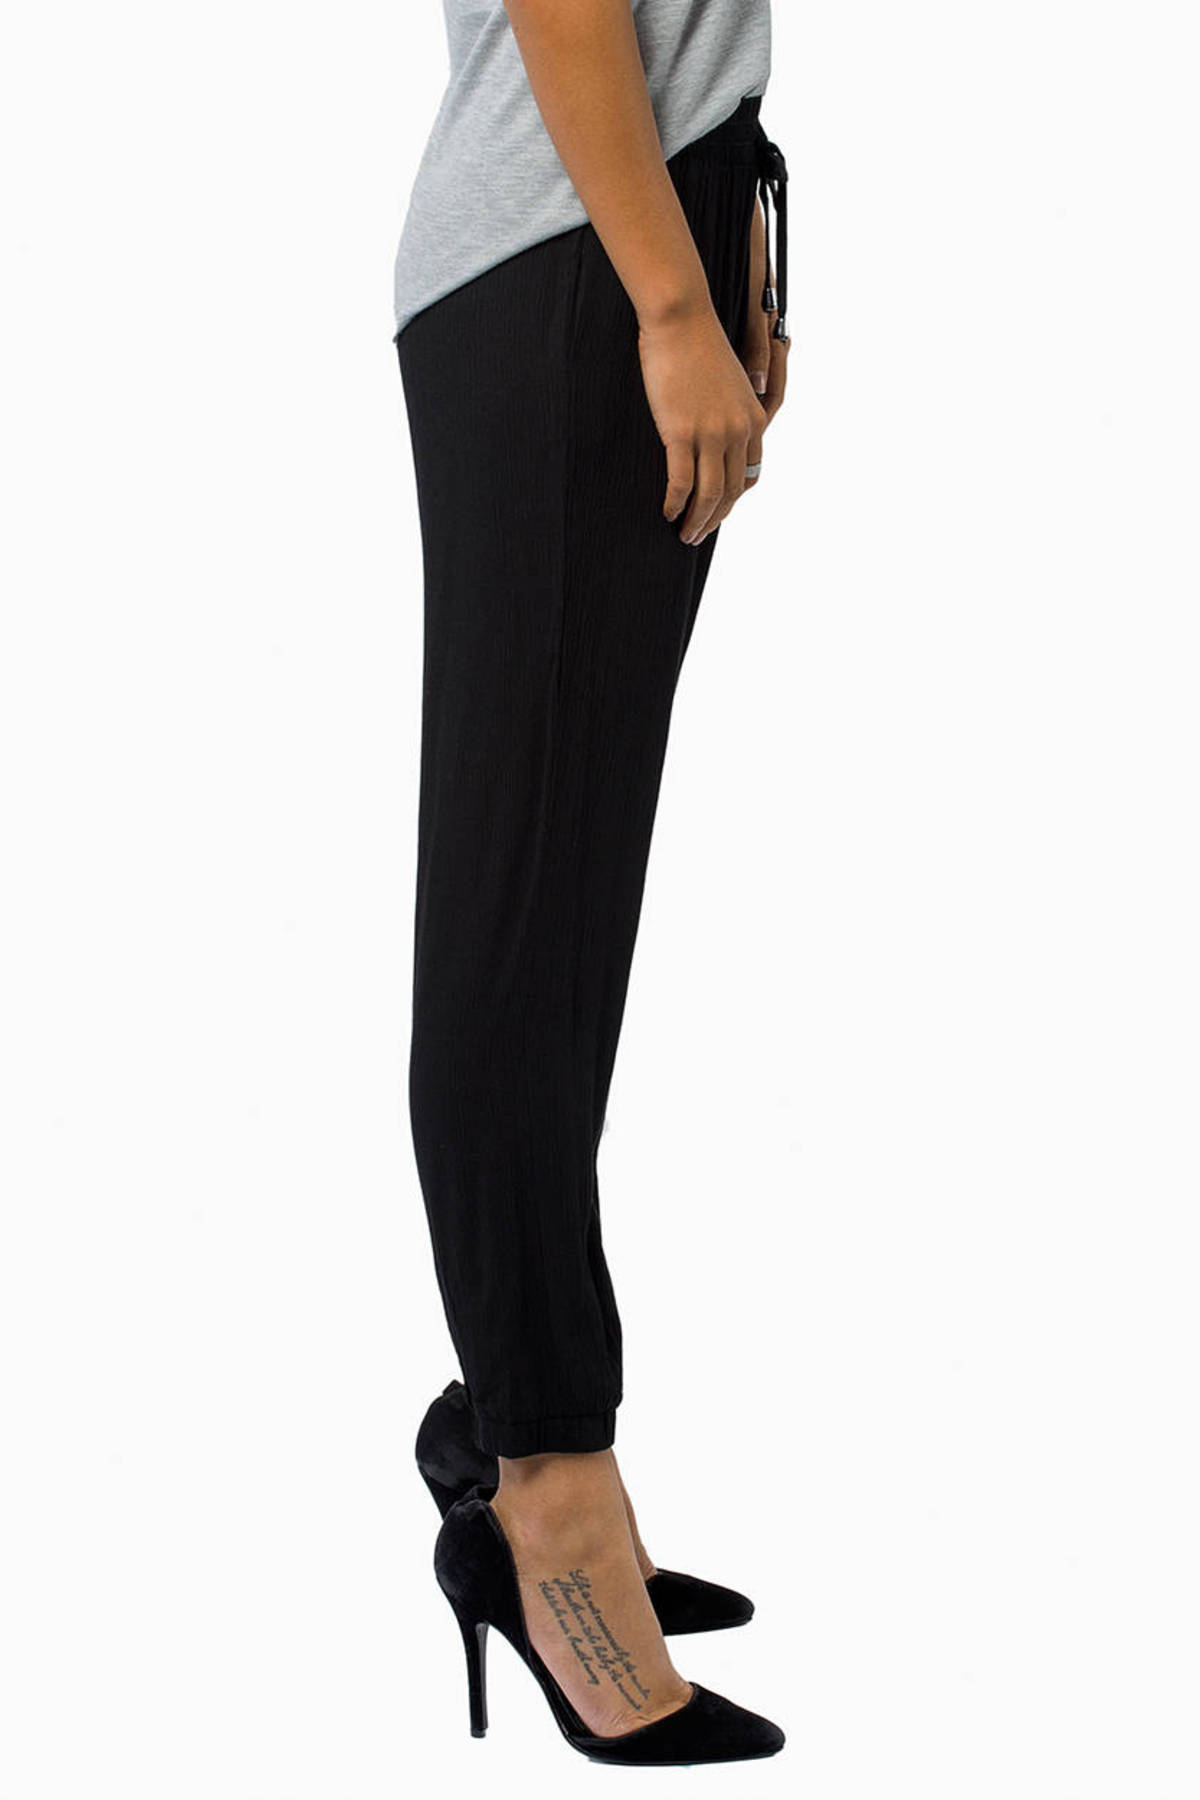 Trendy Black Pants - Baggy Joggers - Black Low Rise Sweatpants